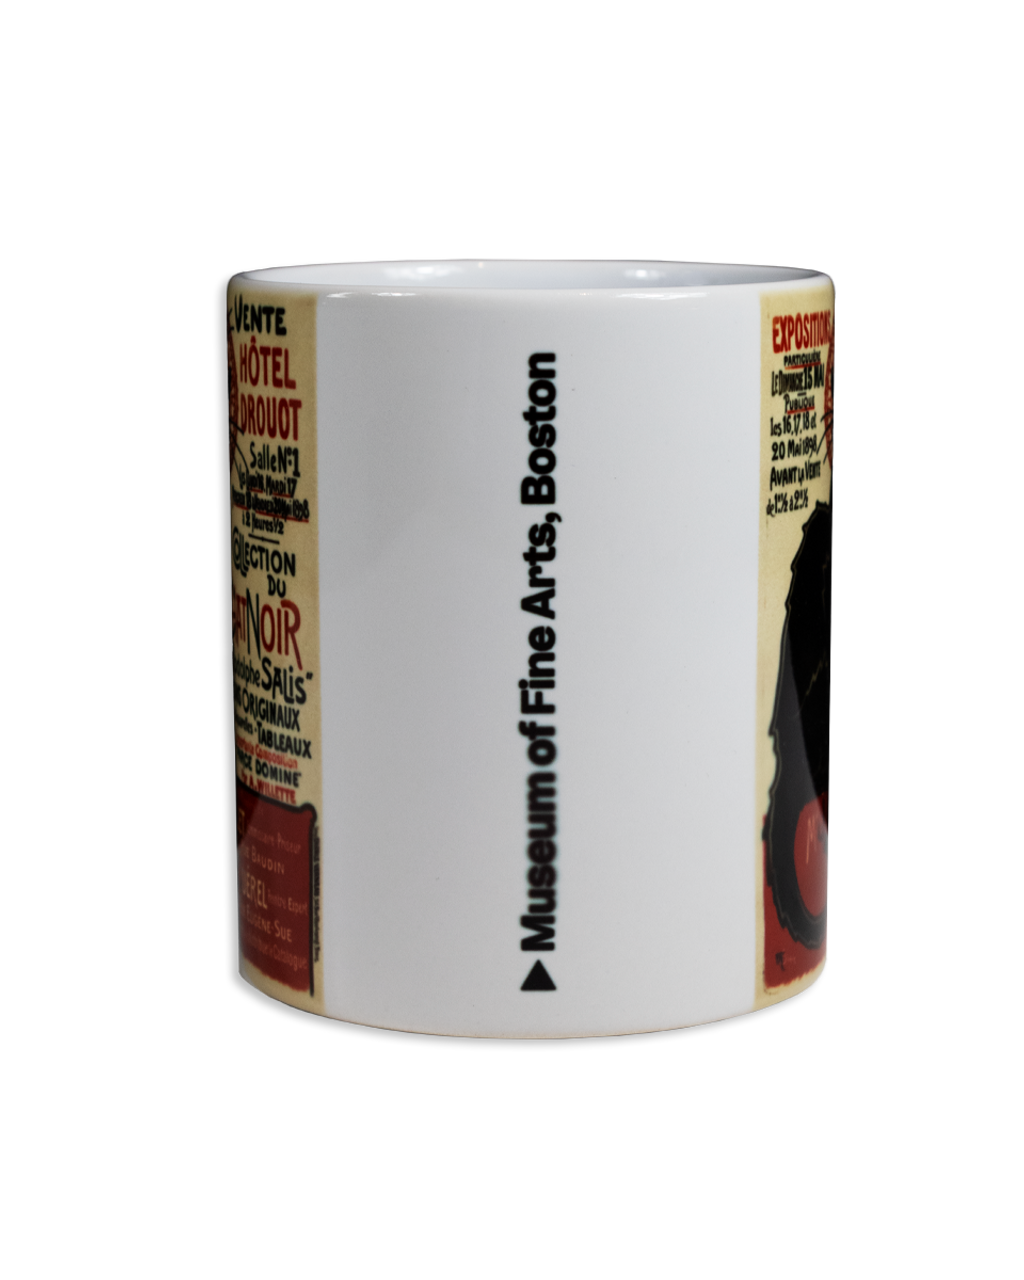 Le Chat Noir Boutique: I Godinger & Co GALLO Wine Series Coffee Mug, Misc. Coffee  Mugs, CMIGodingerGreenGALLO